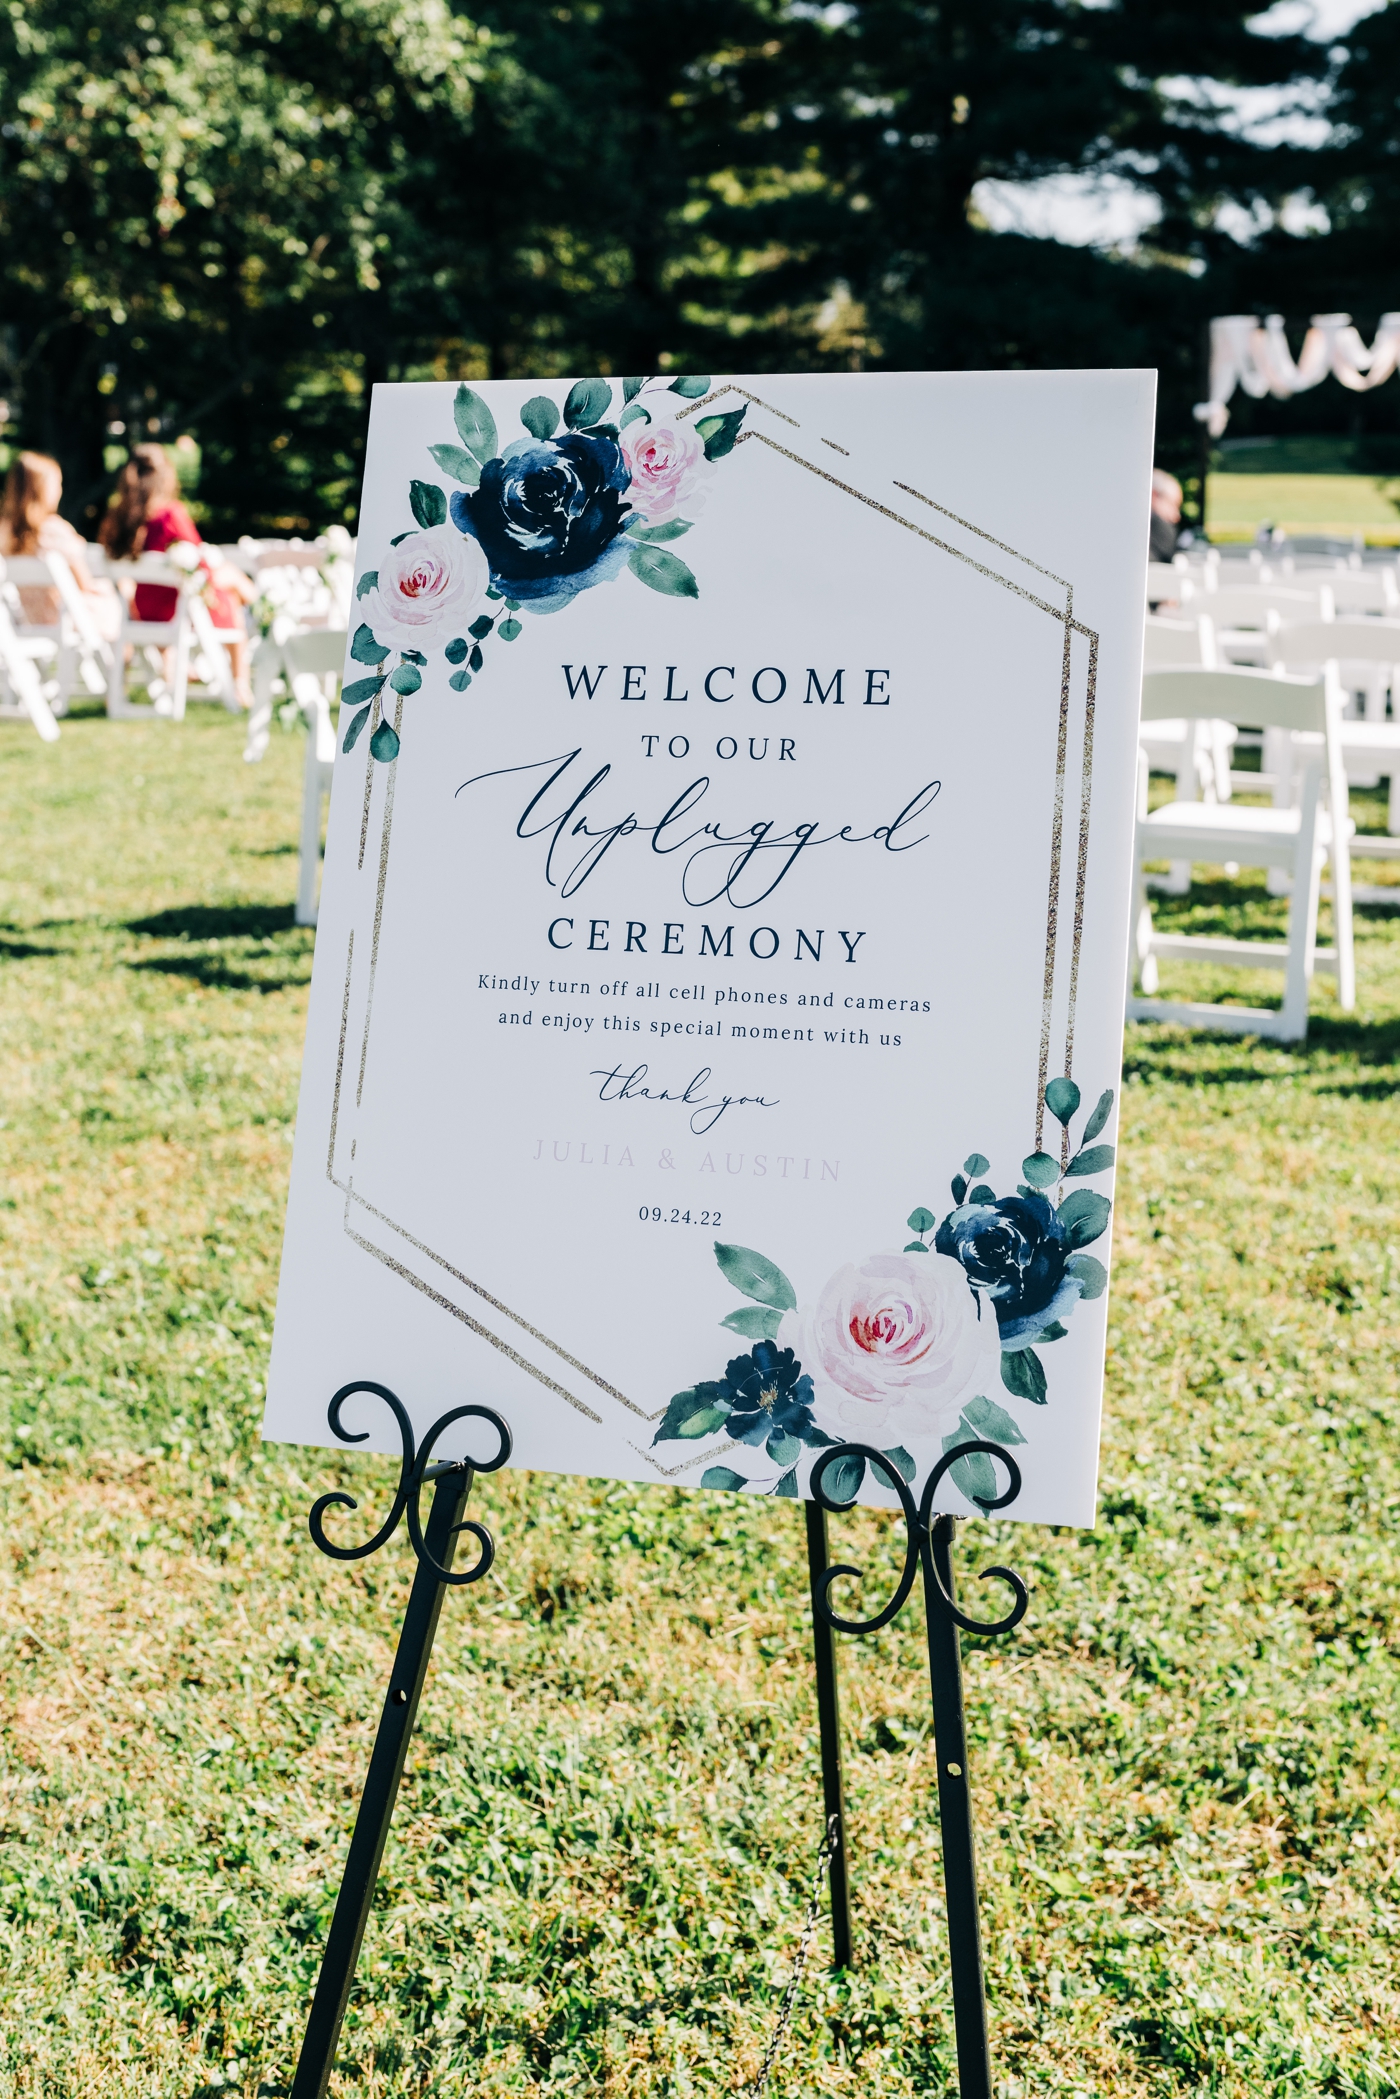 Wedding welcome signage at backyard wedding ceremony